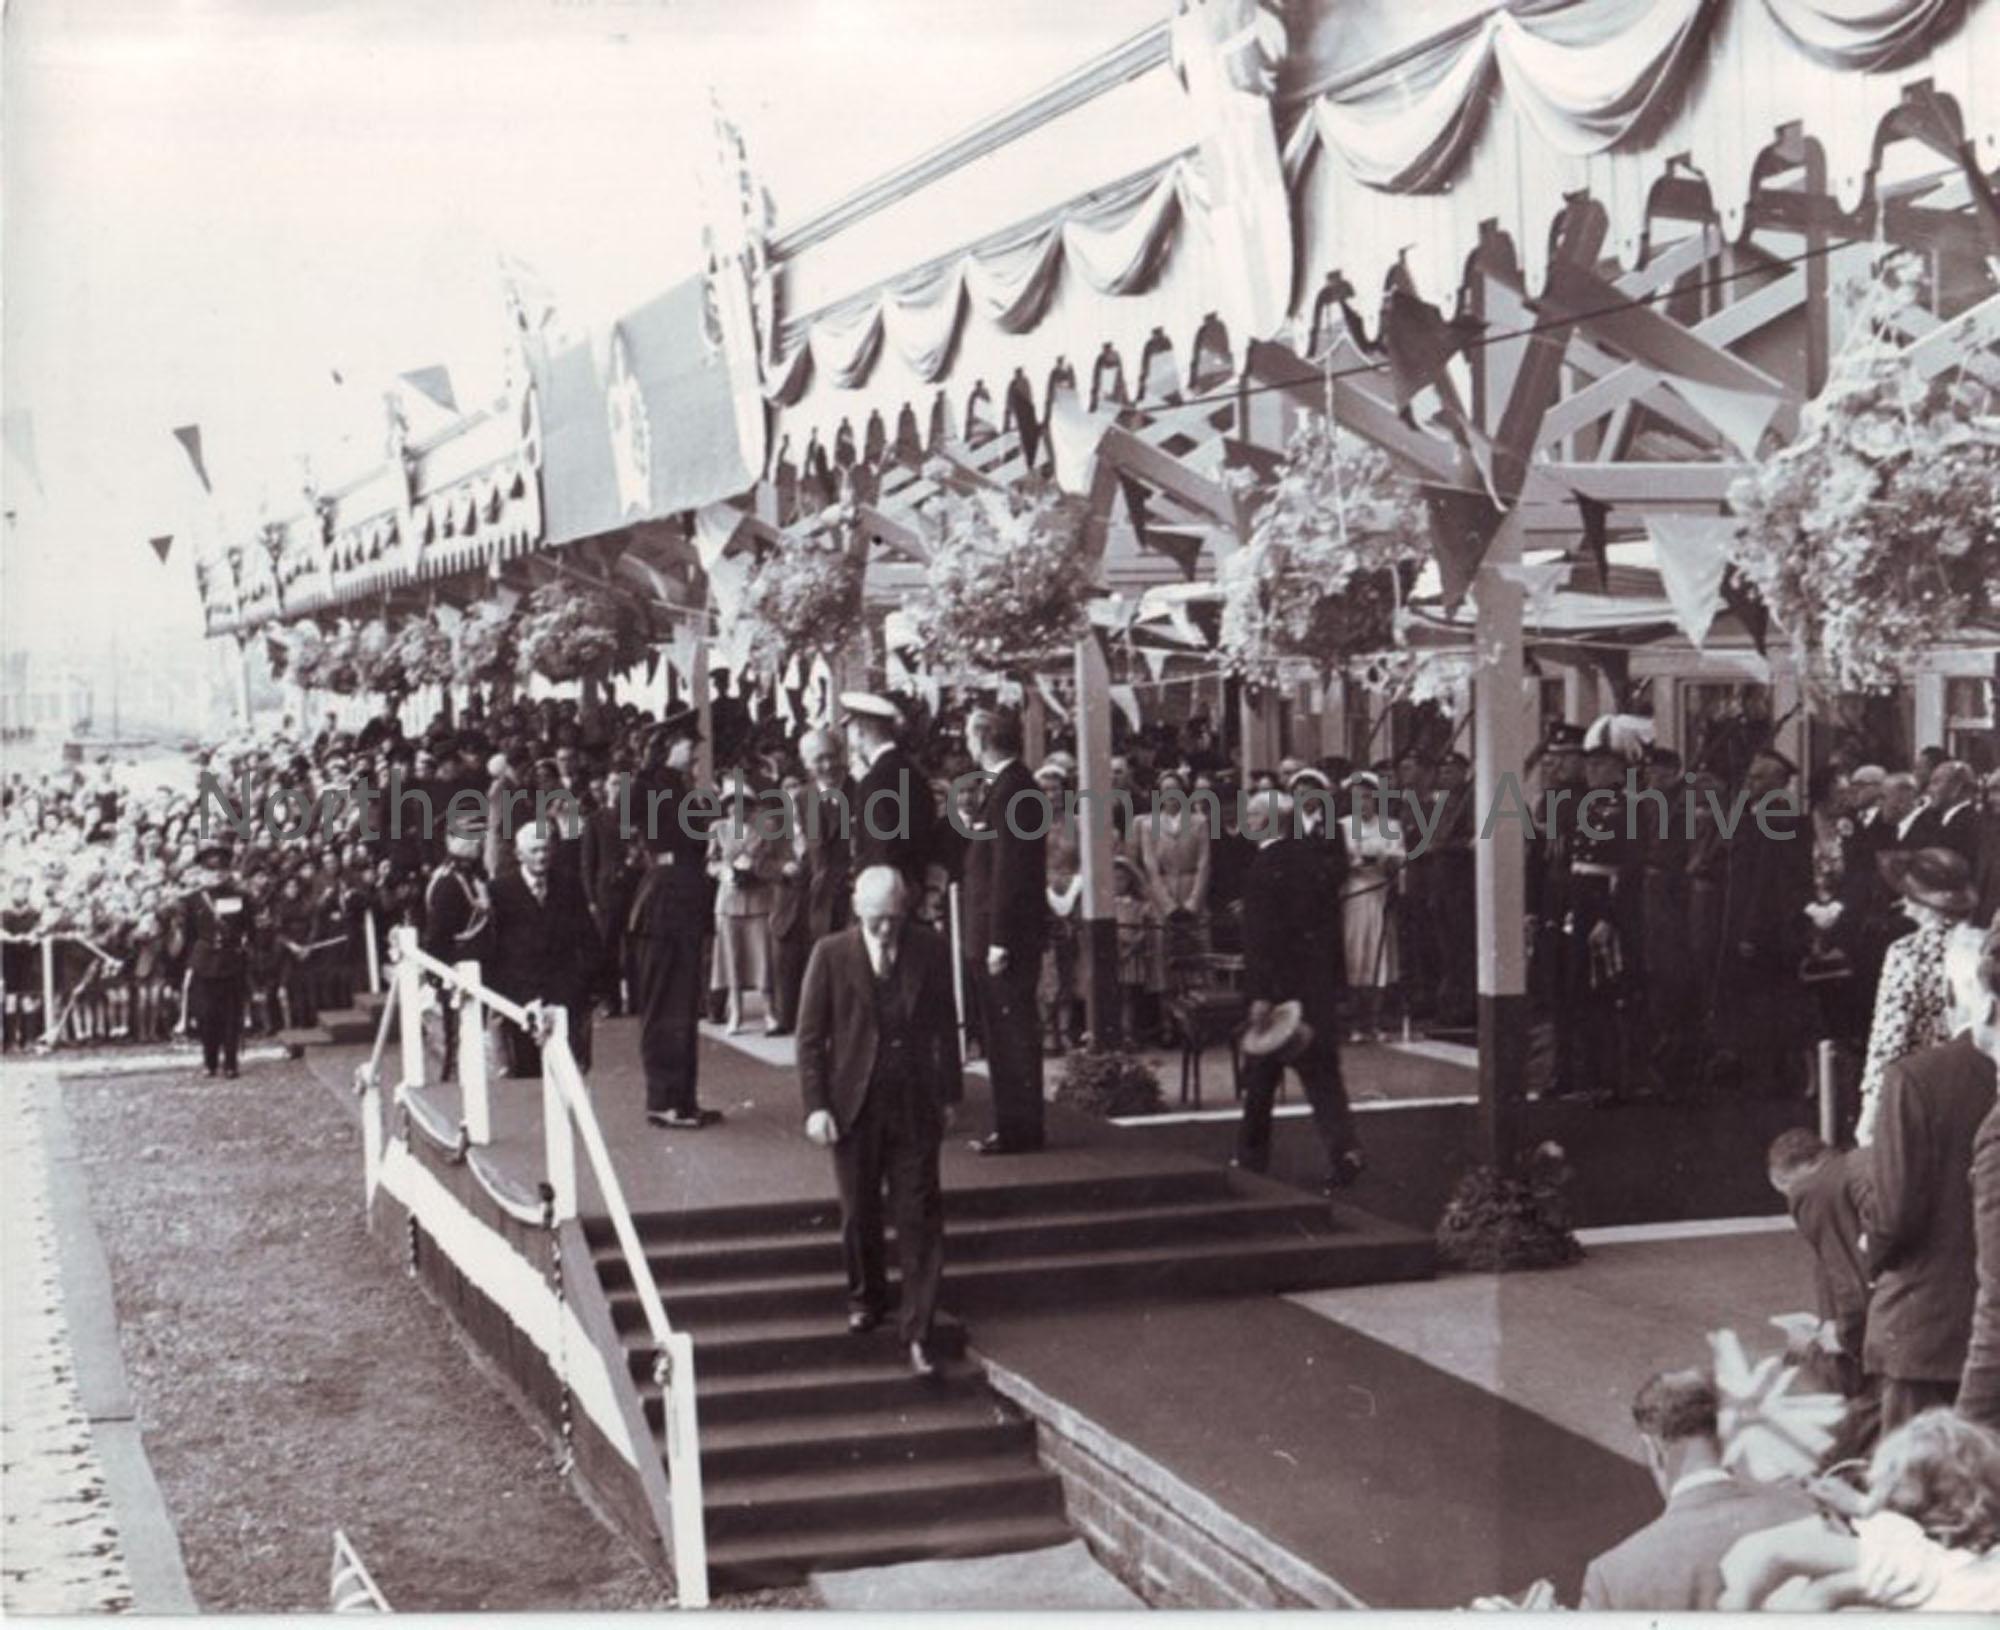 photographs of Queen’s coronation visit to Ballymoney 1953